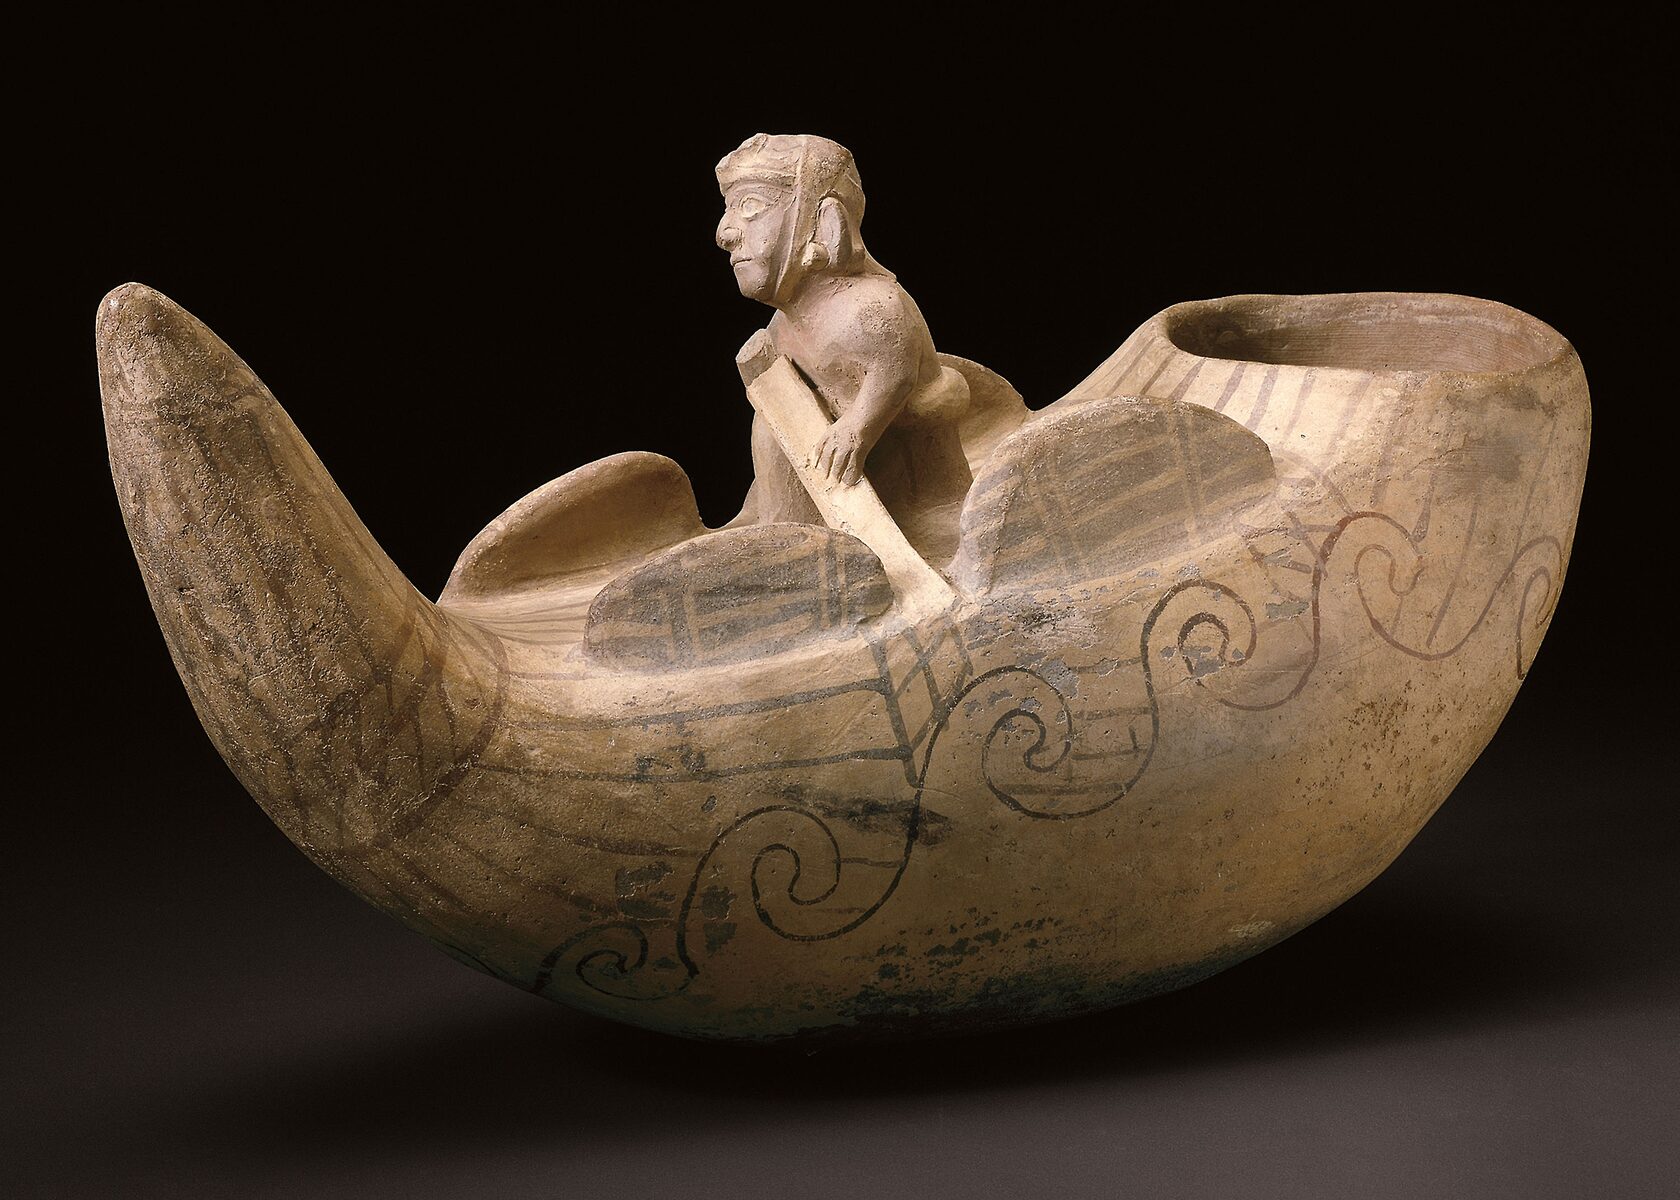 Сосуд в виде лодки с рыбаком. Моче, 100 гг. до н.э. - 500 гг. н.э. Коллекция The Art Institute of Chicago.